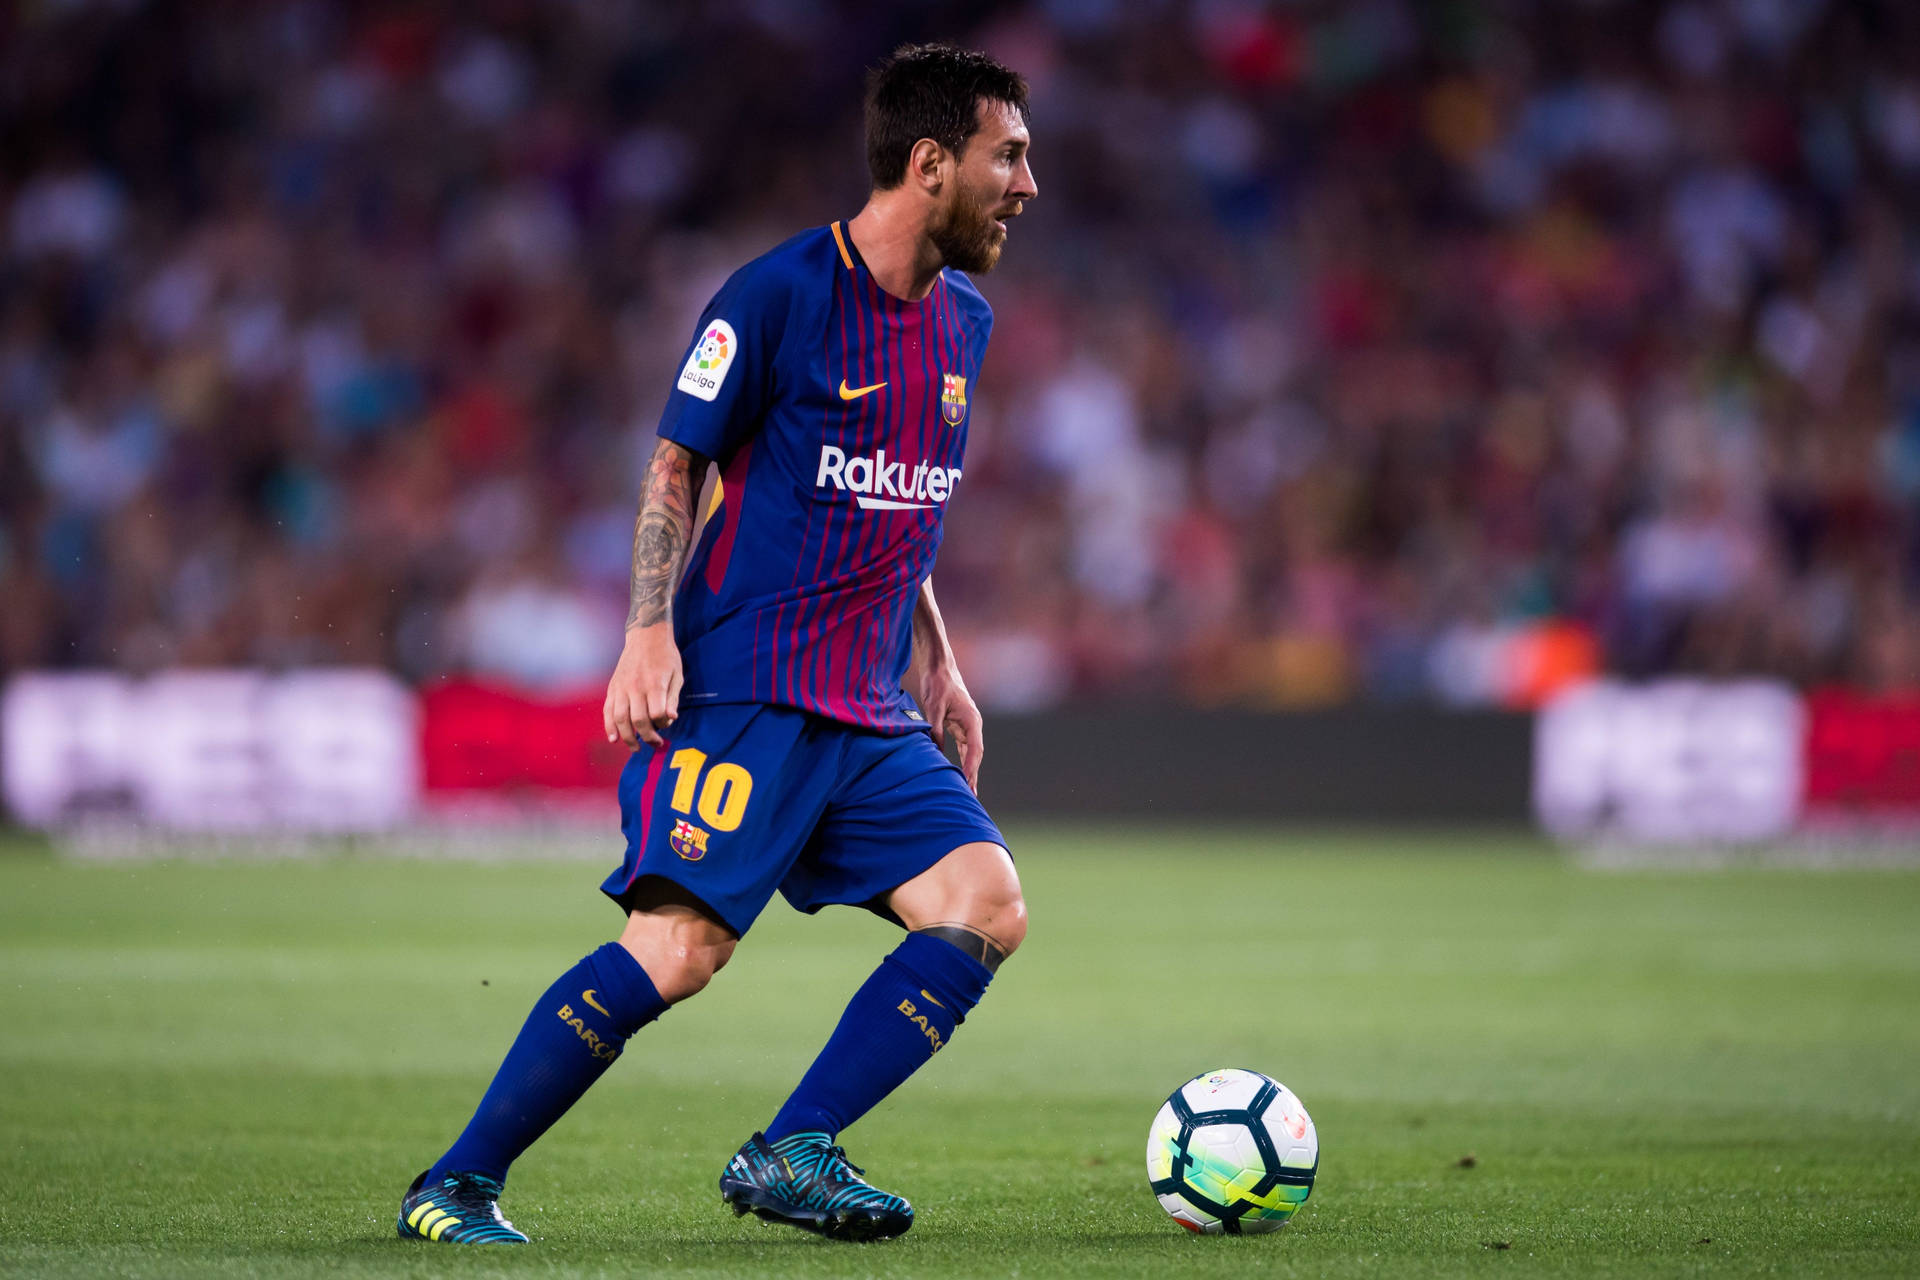 Lionelmessi 2020 Sparkar Fotboll - Lionel Messi 2020 Kicking Soccer Ball. Wallpaper